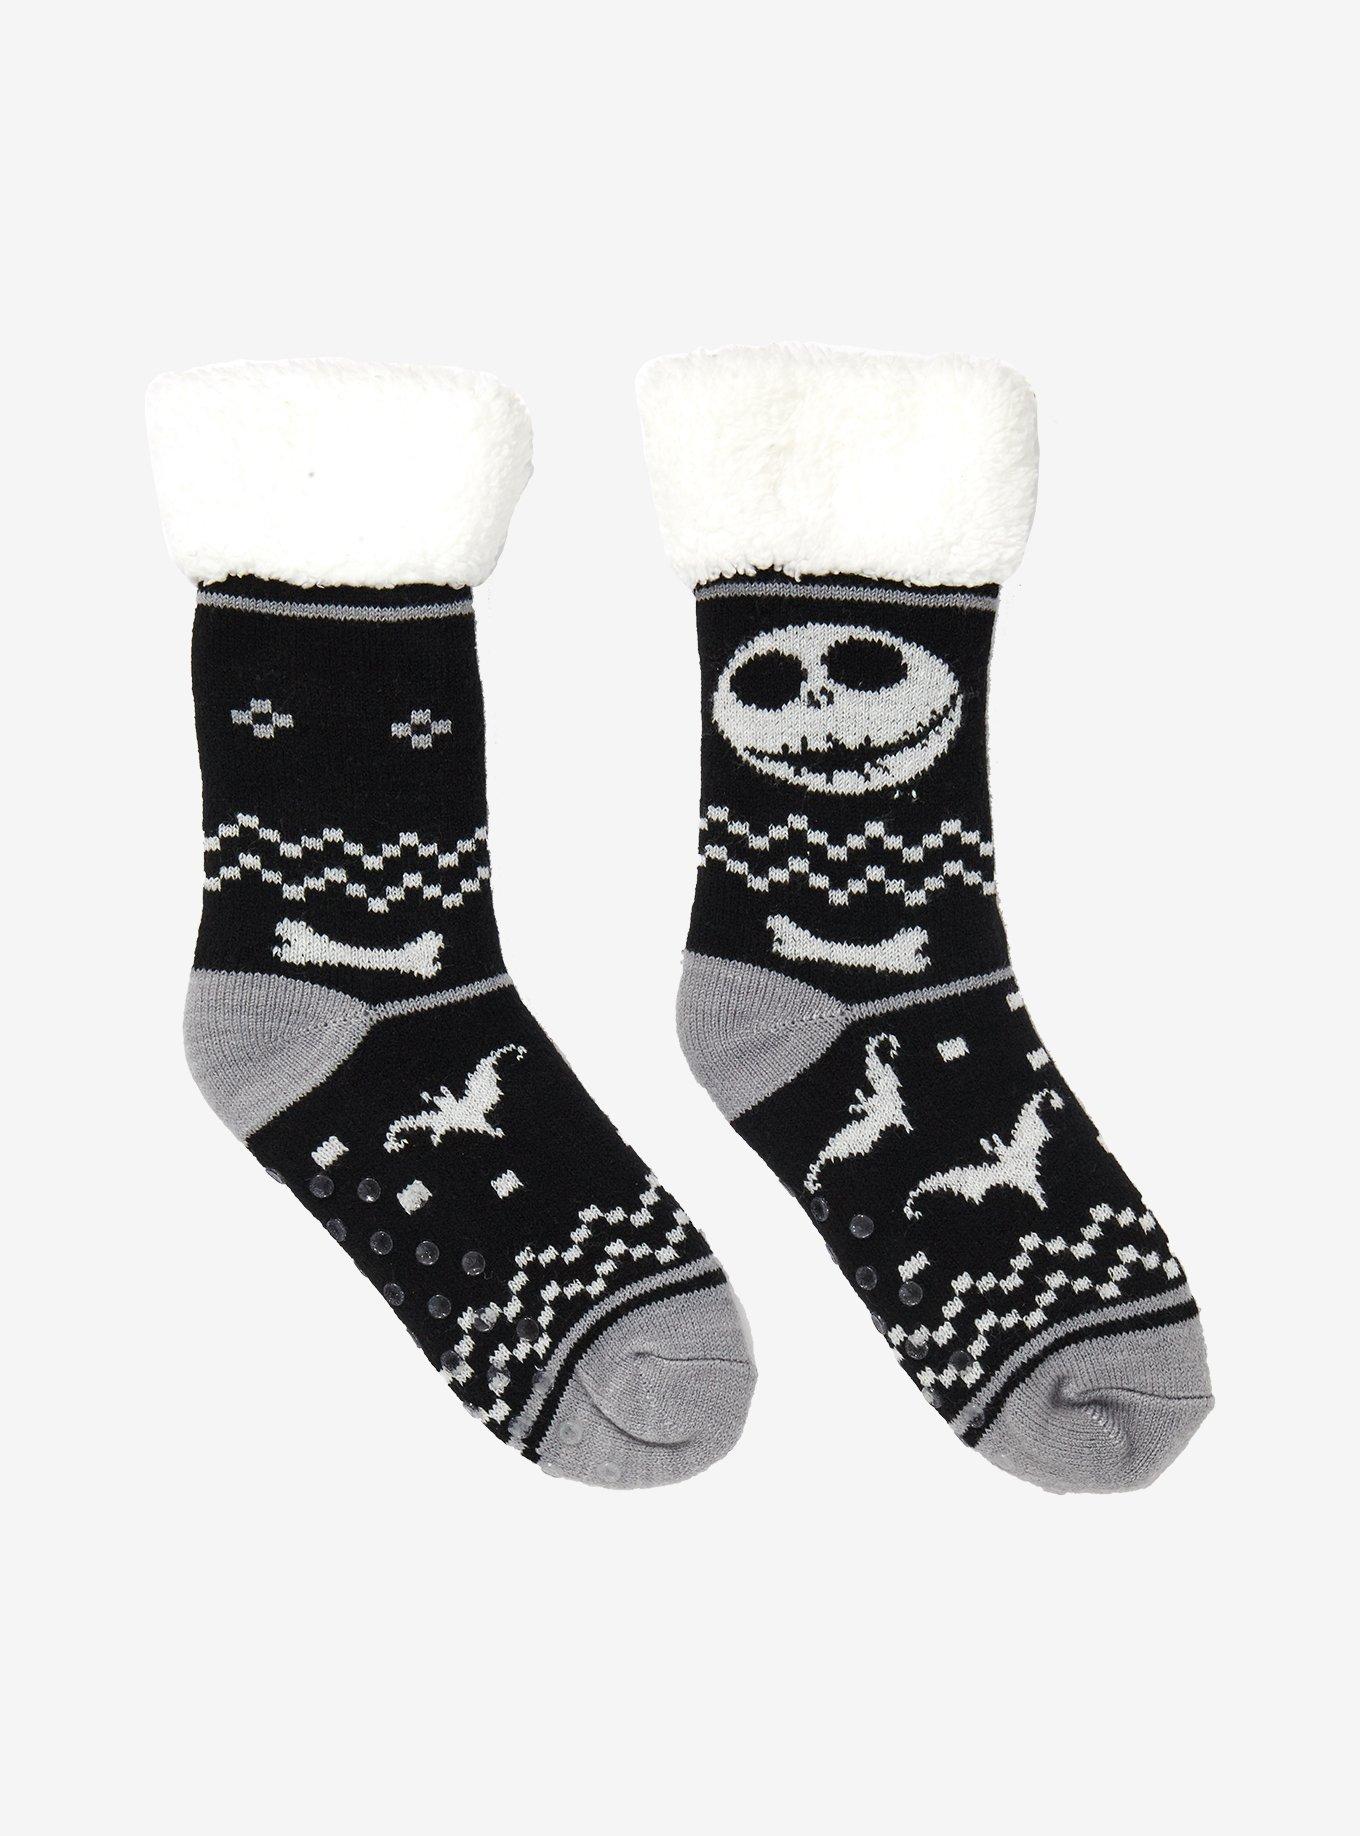 The Nightmare Before Christmas Jack Skellington Cozy Slipper Socks, , alternate